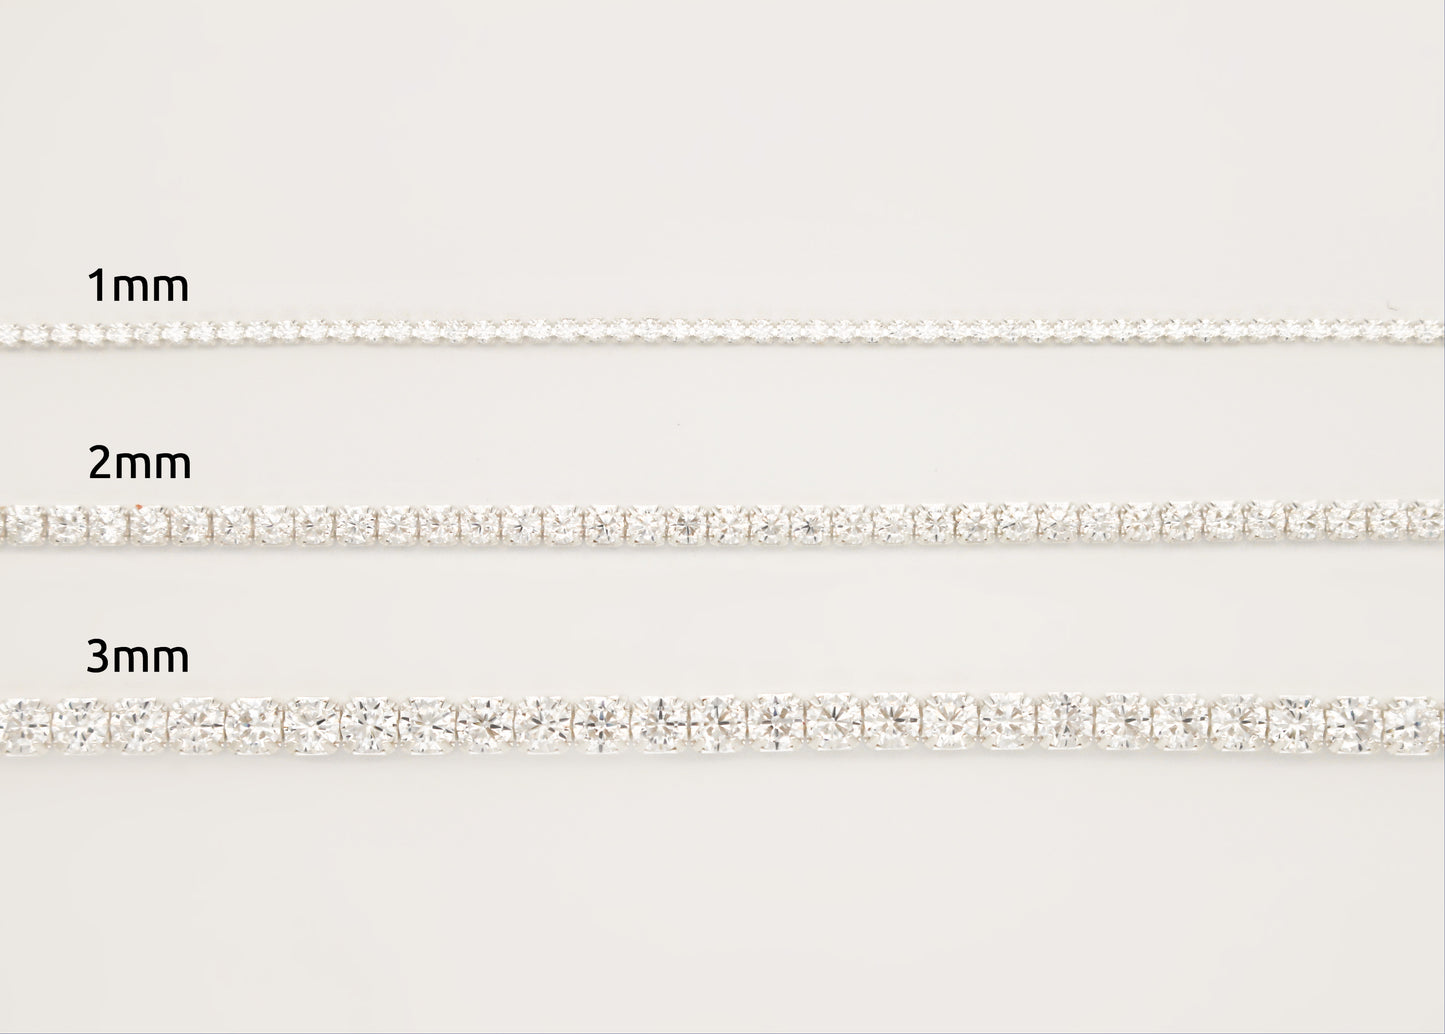 Luxurious Women's Bracelet in 925 Sterling Silver ∙ Row of Crystals ∙ Sparkling Tennis Bracelet ∙ Zircon Tennis Chain 1mm 2mm 3mm